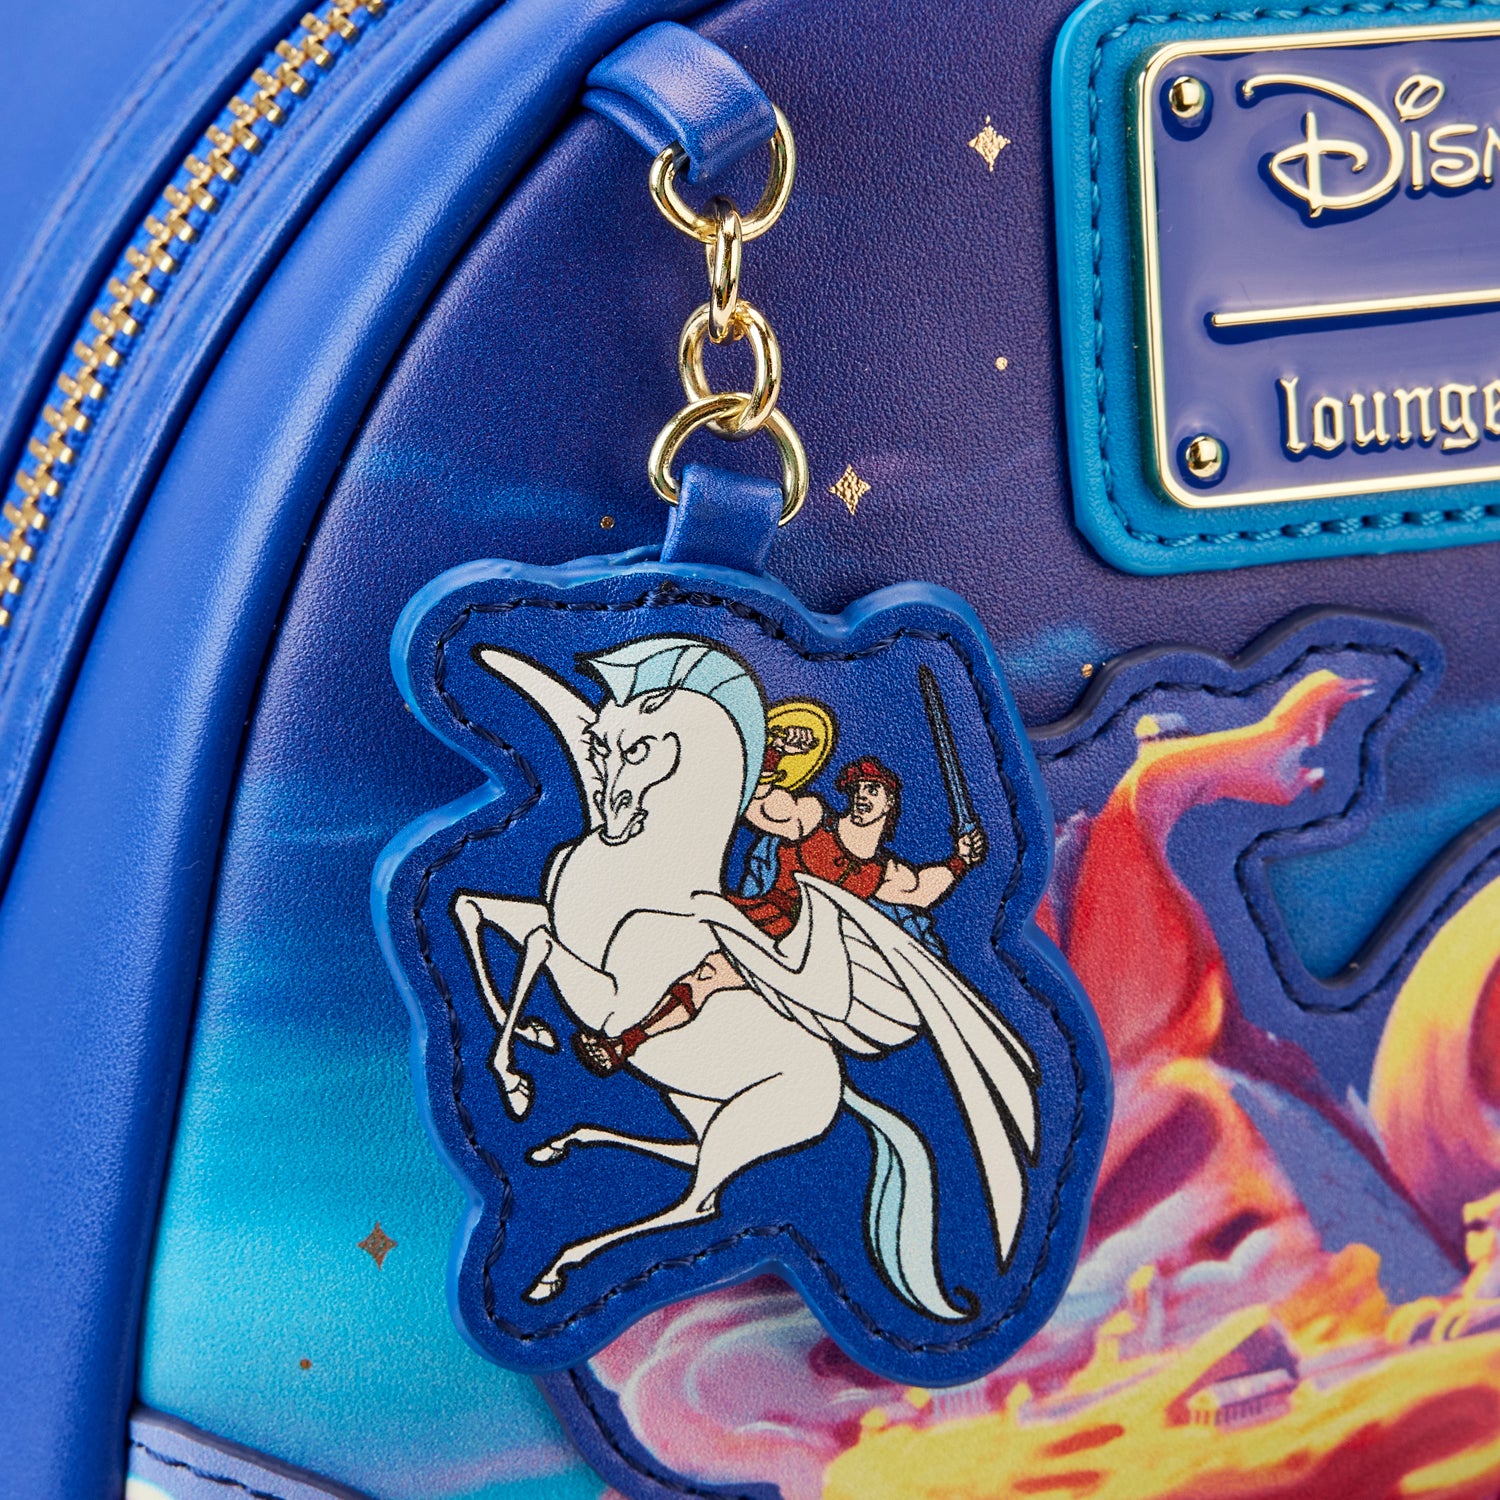 Loungefly x Disney Hercules Mount Olympus Gates Mini Backpack